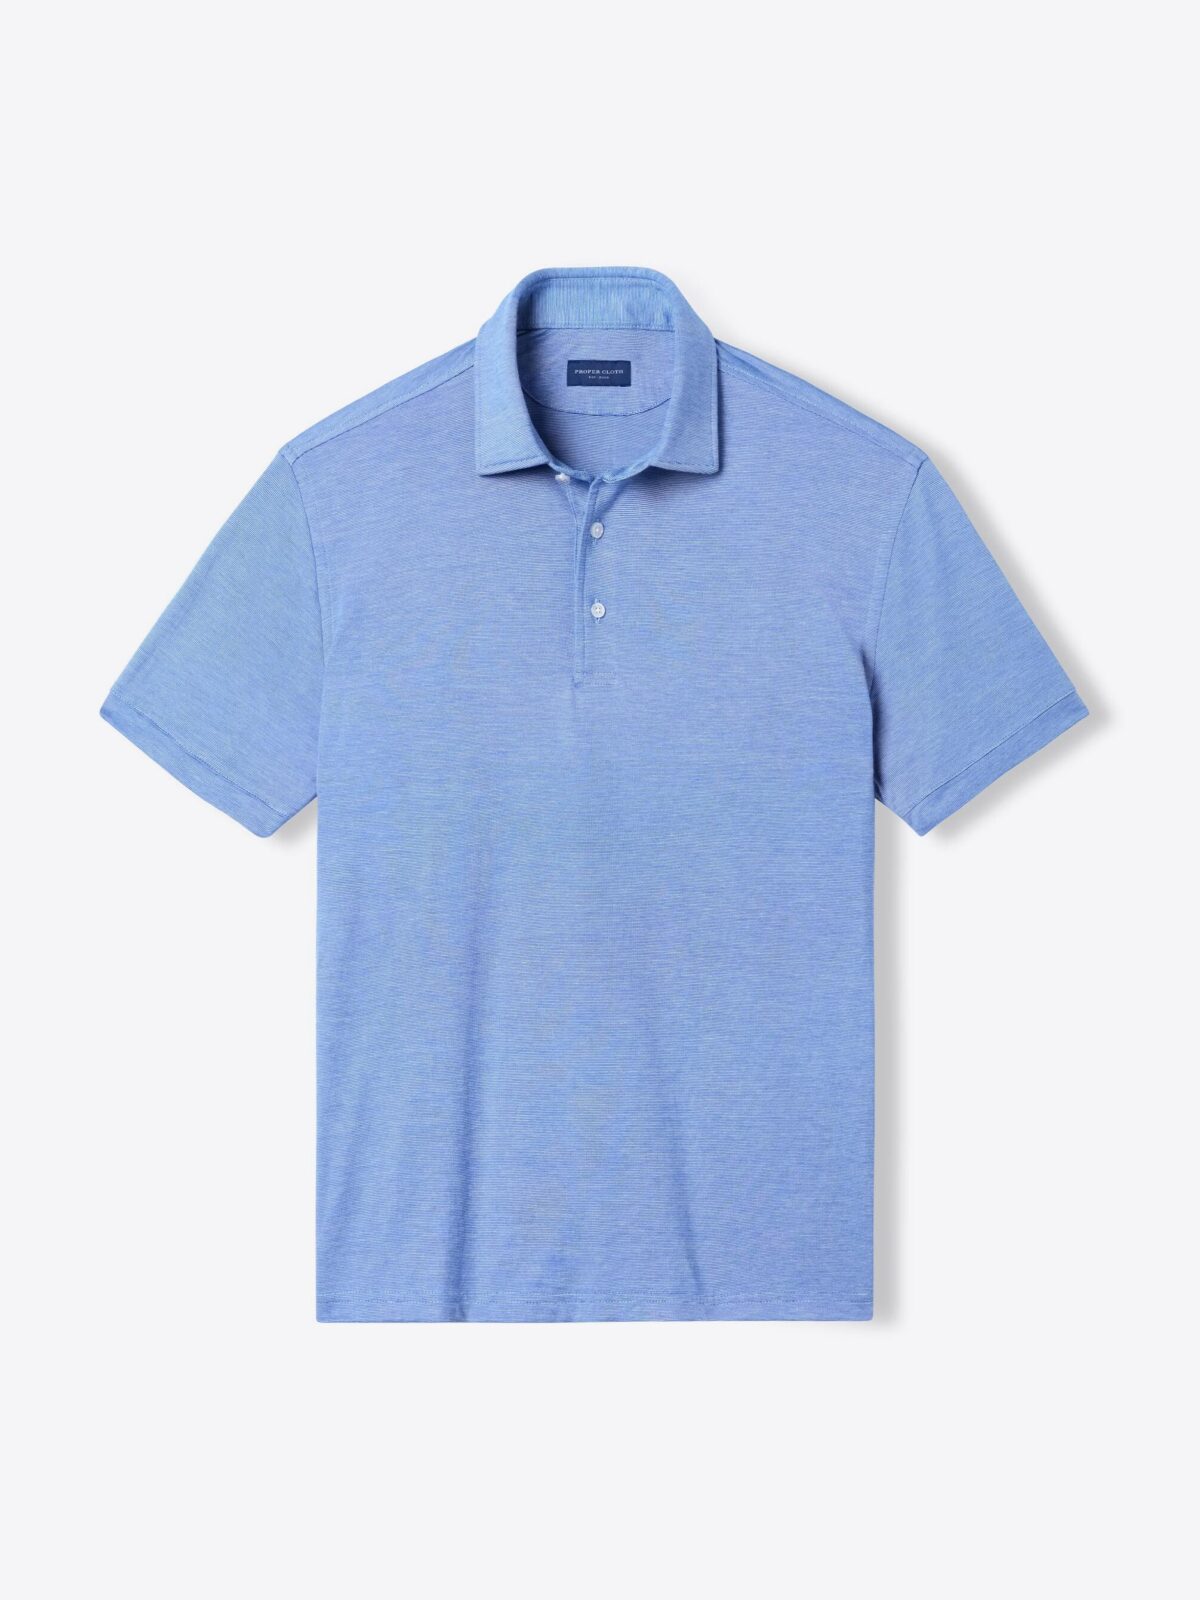 Melange Pinehurst by Tencel Cotton Shirt Jersey Cloth Blue Proper and